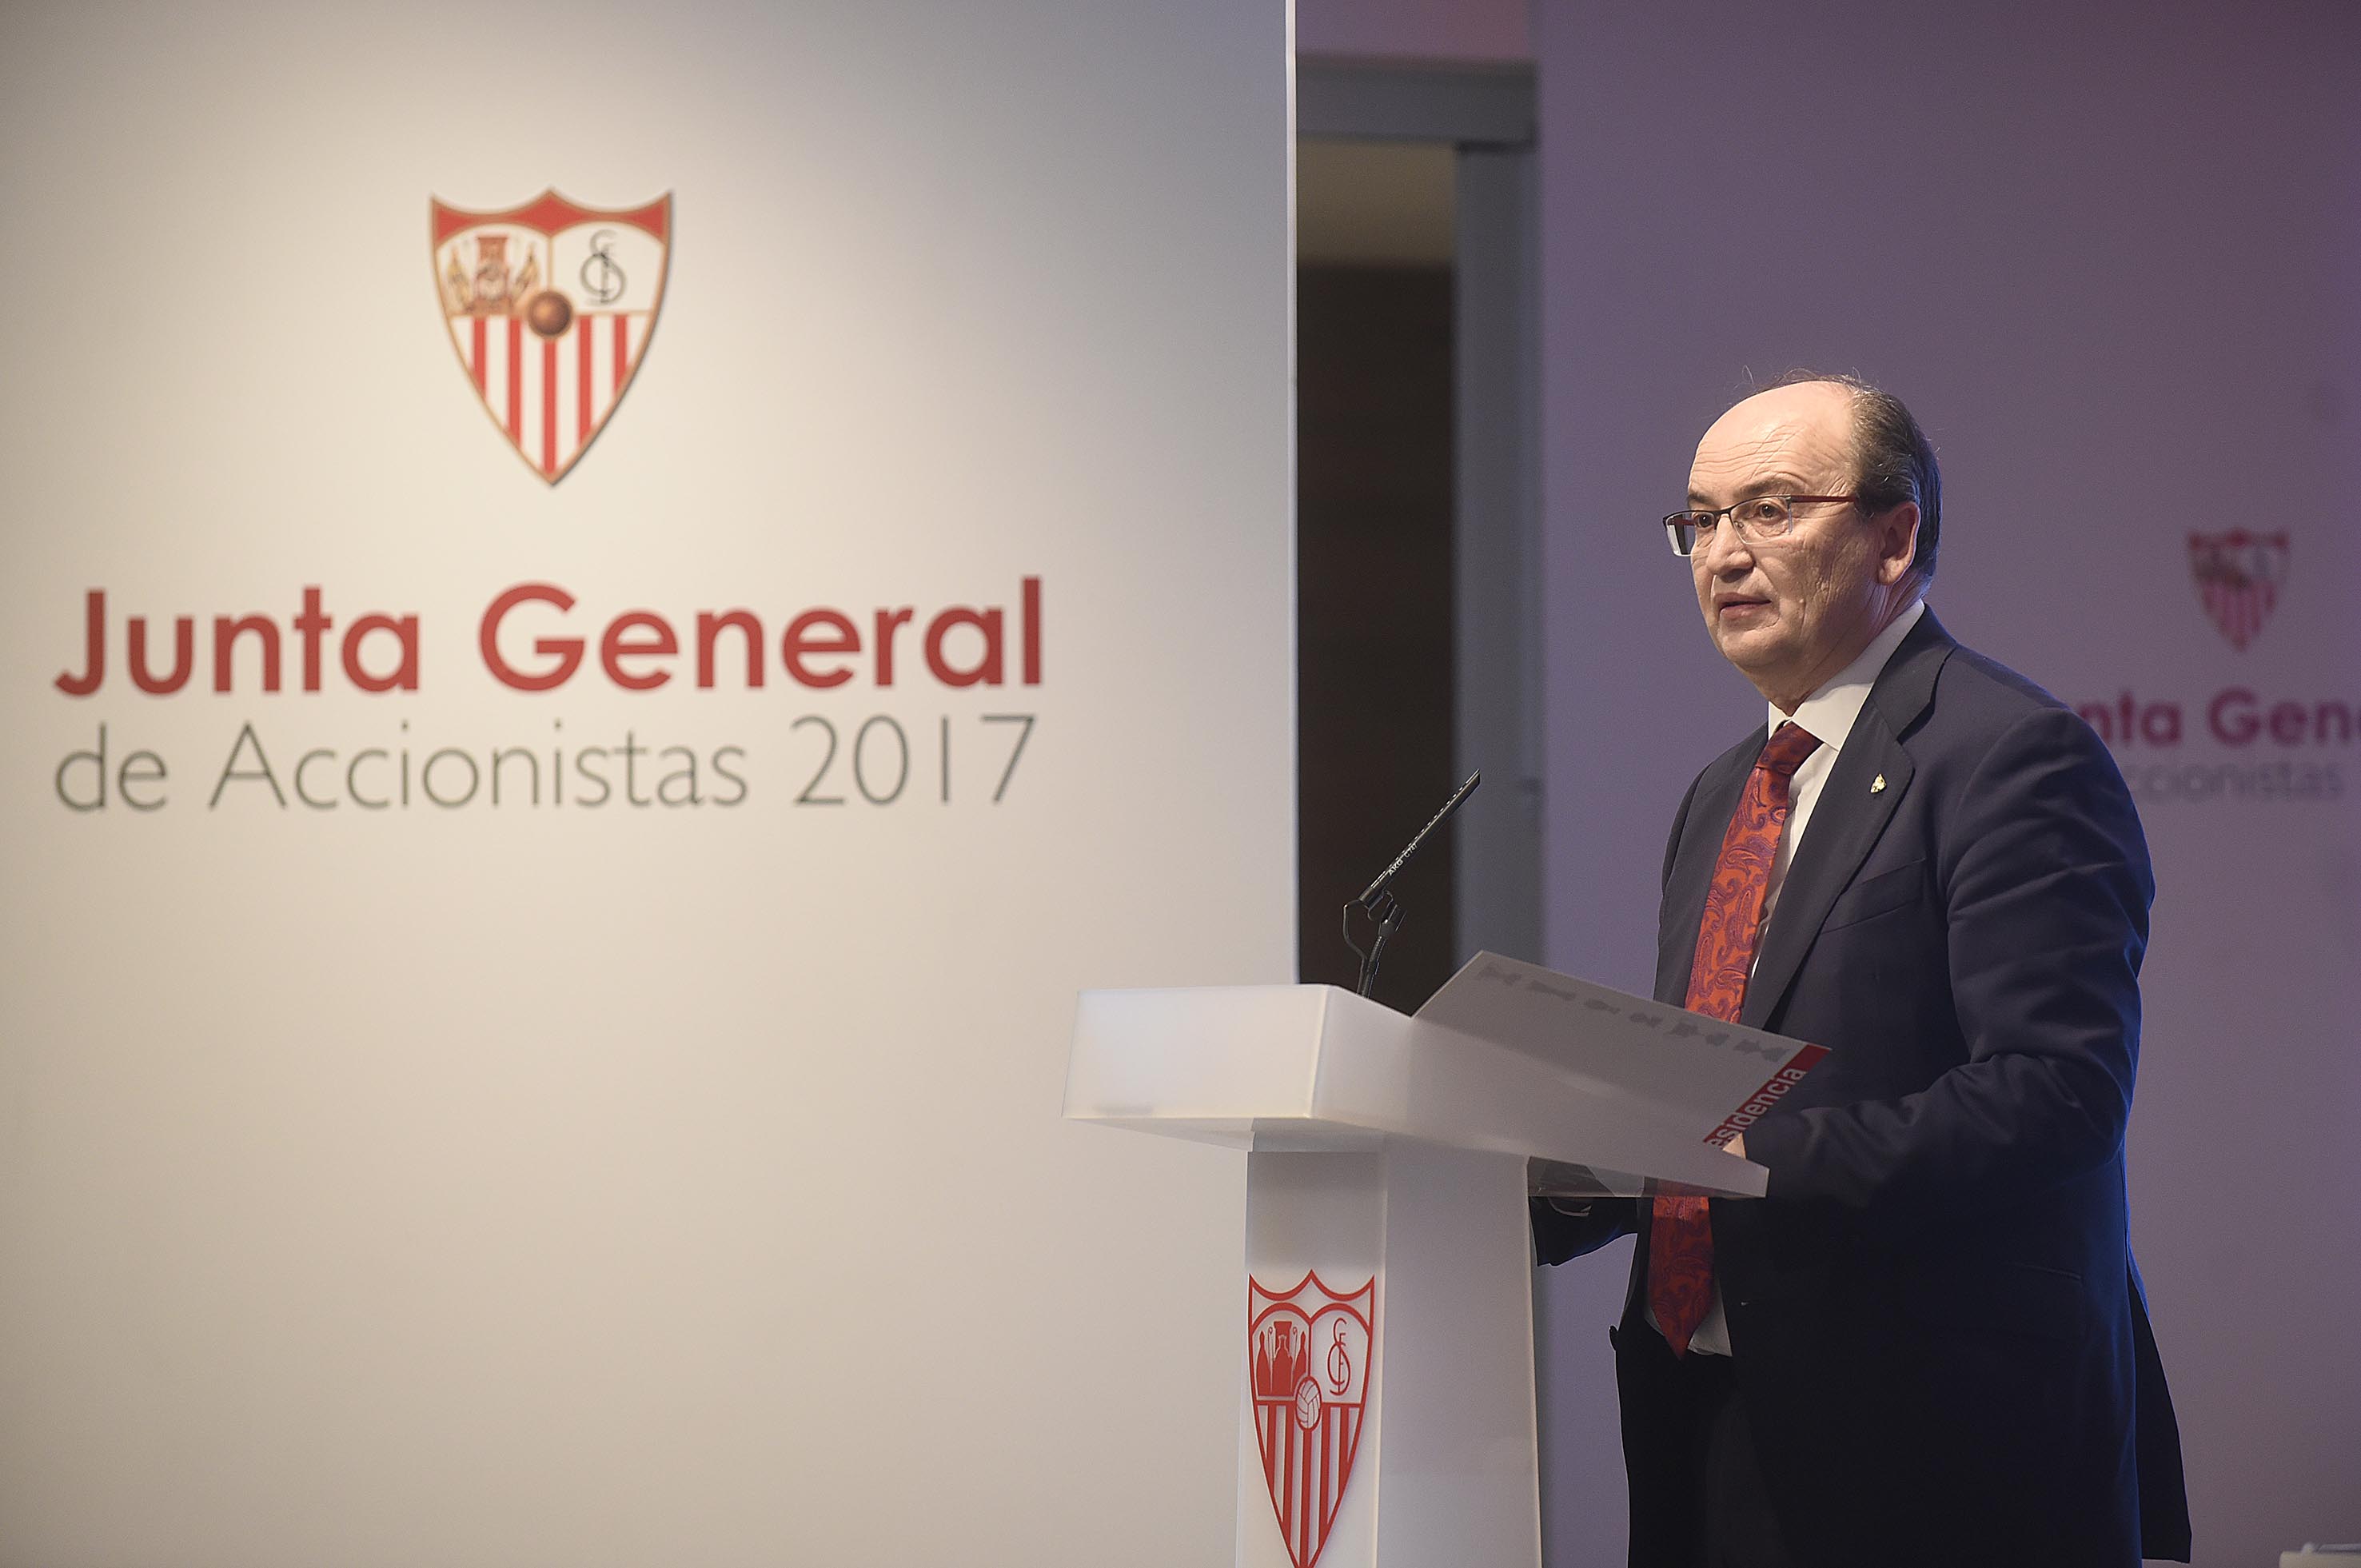 Junta General de Accionistas del Sevilla FC de 2017